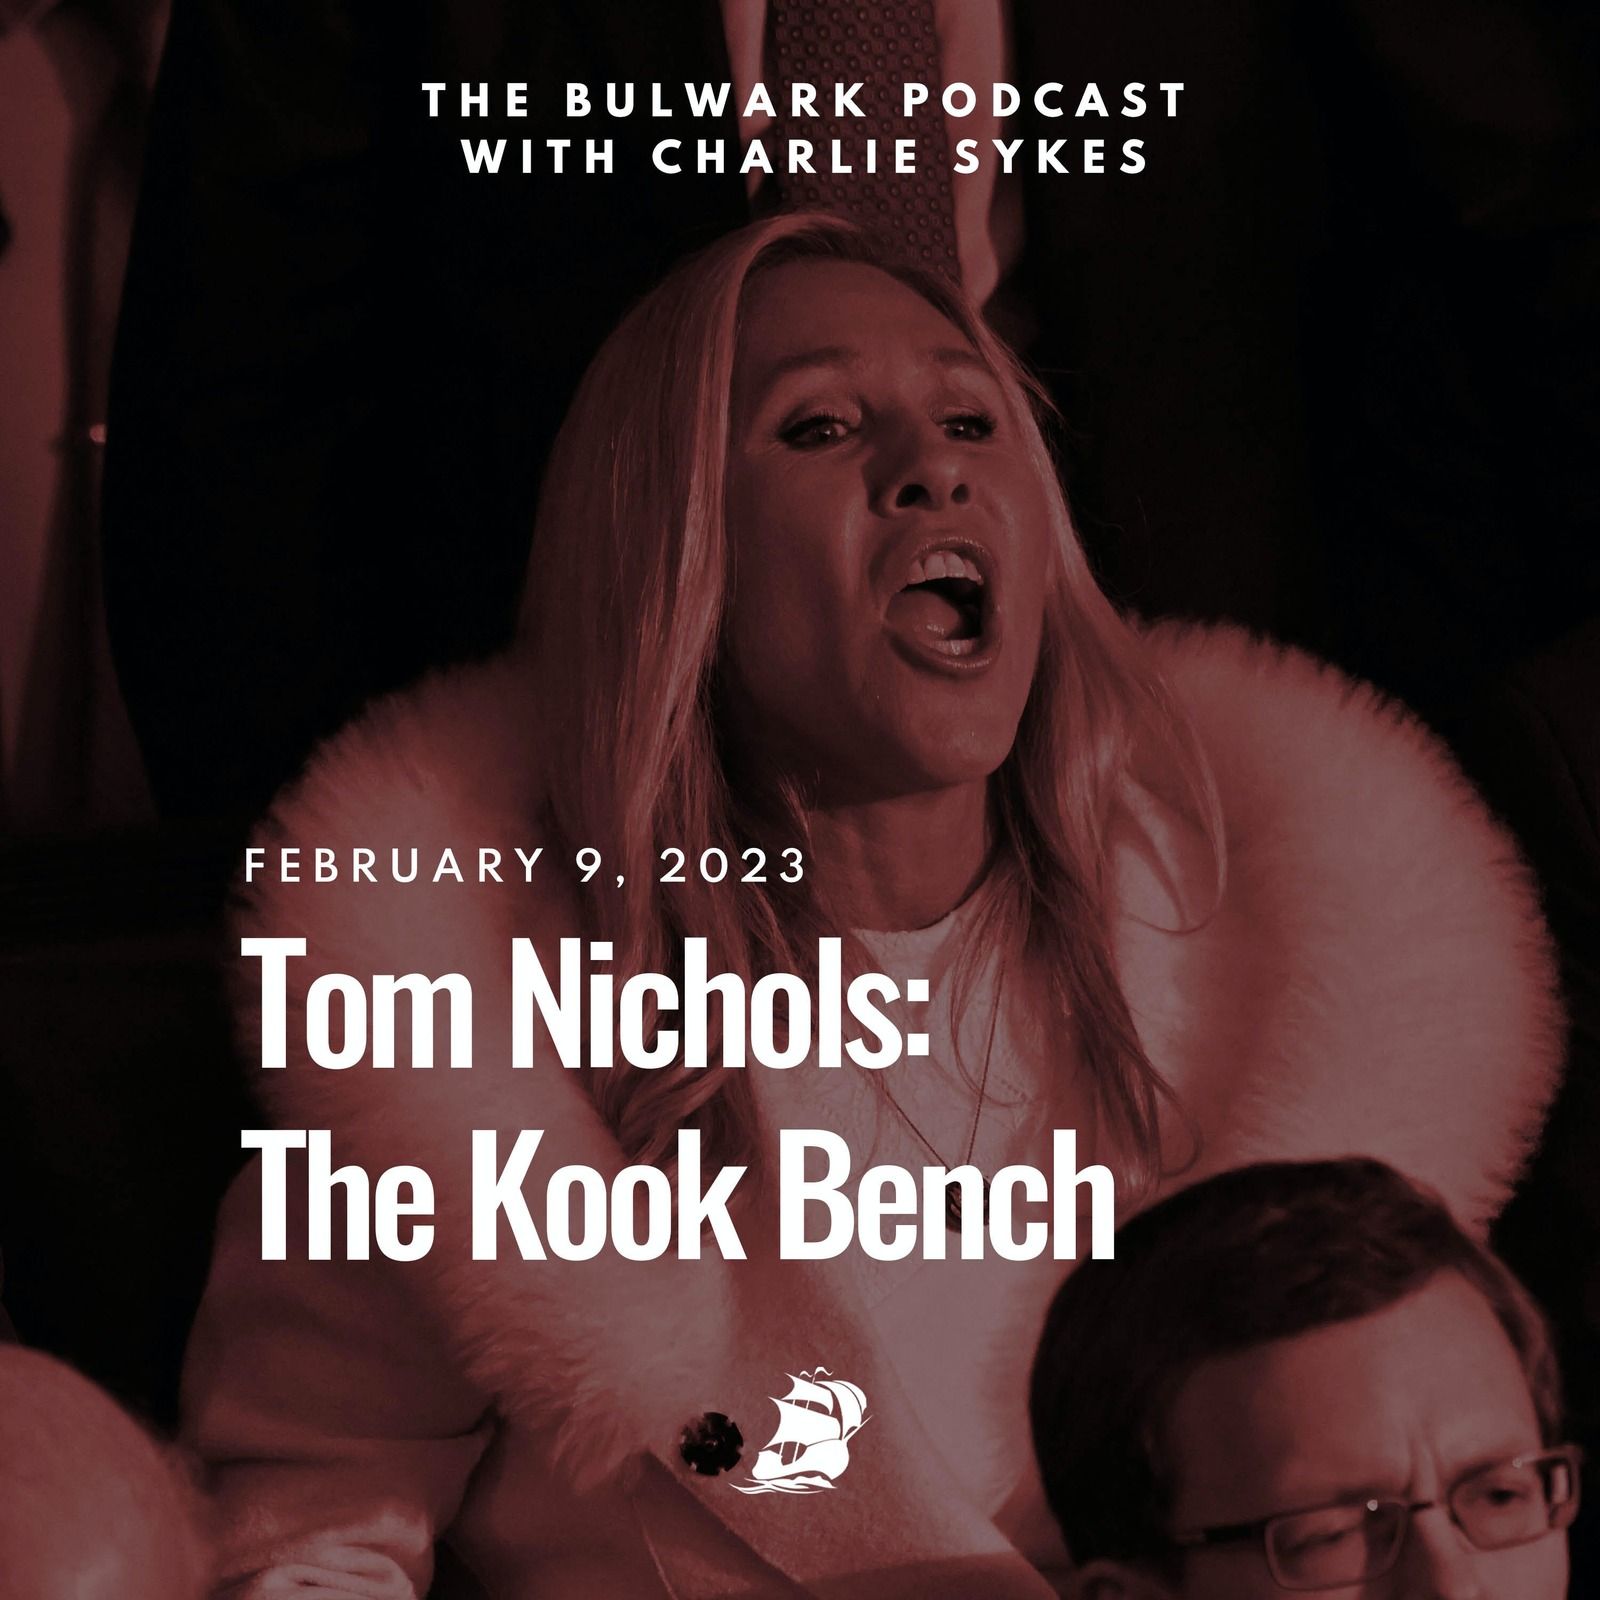 Tom Nichols: The Kook Bench by The Bulwark Podcast